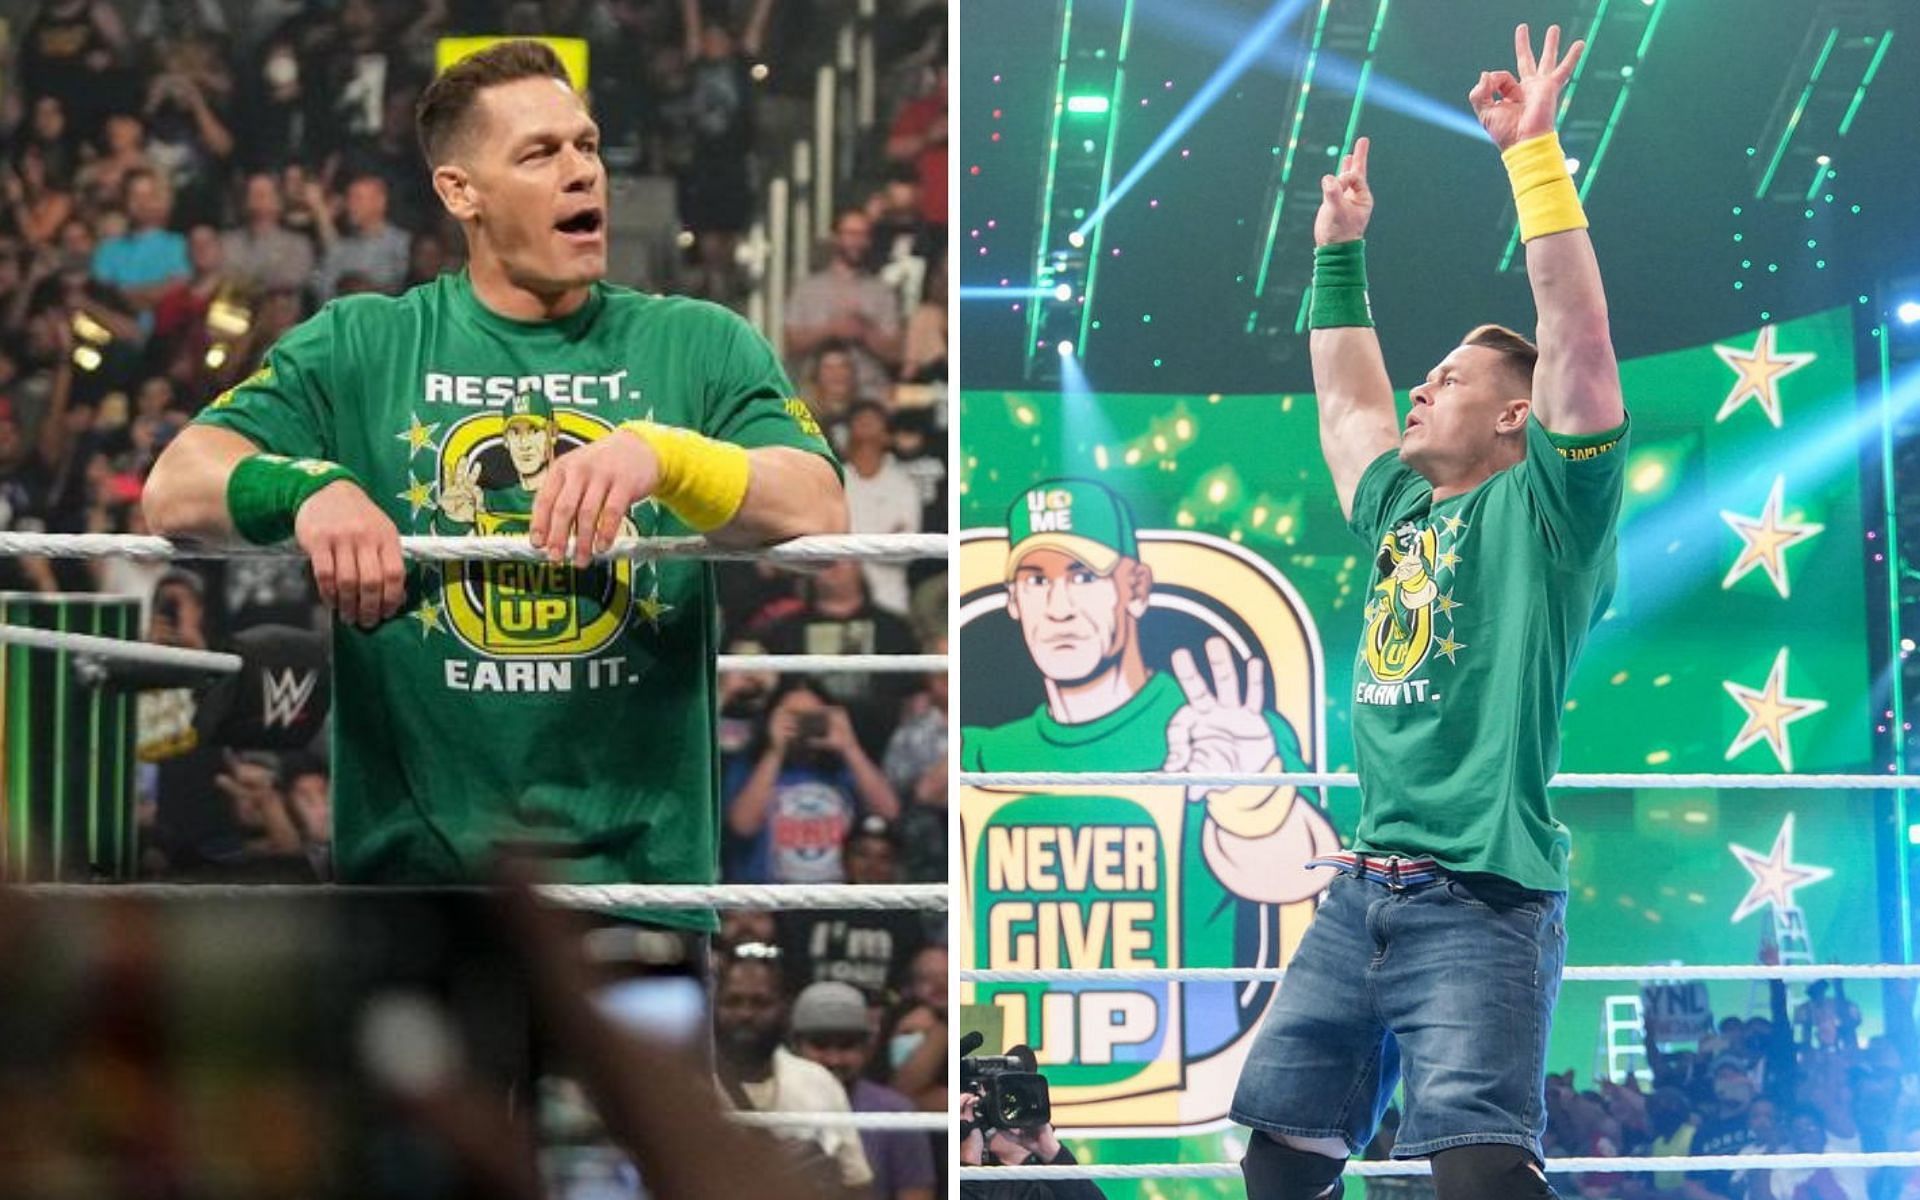 John Cena at Money in the Bank 2021!